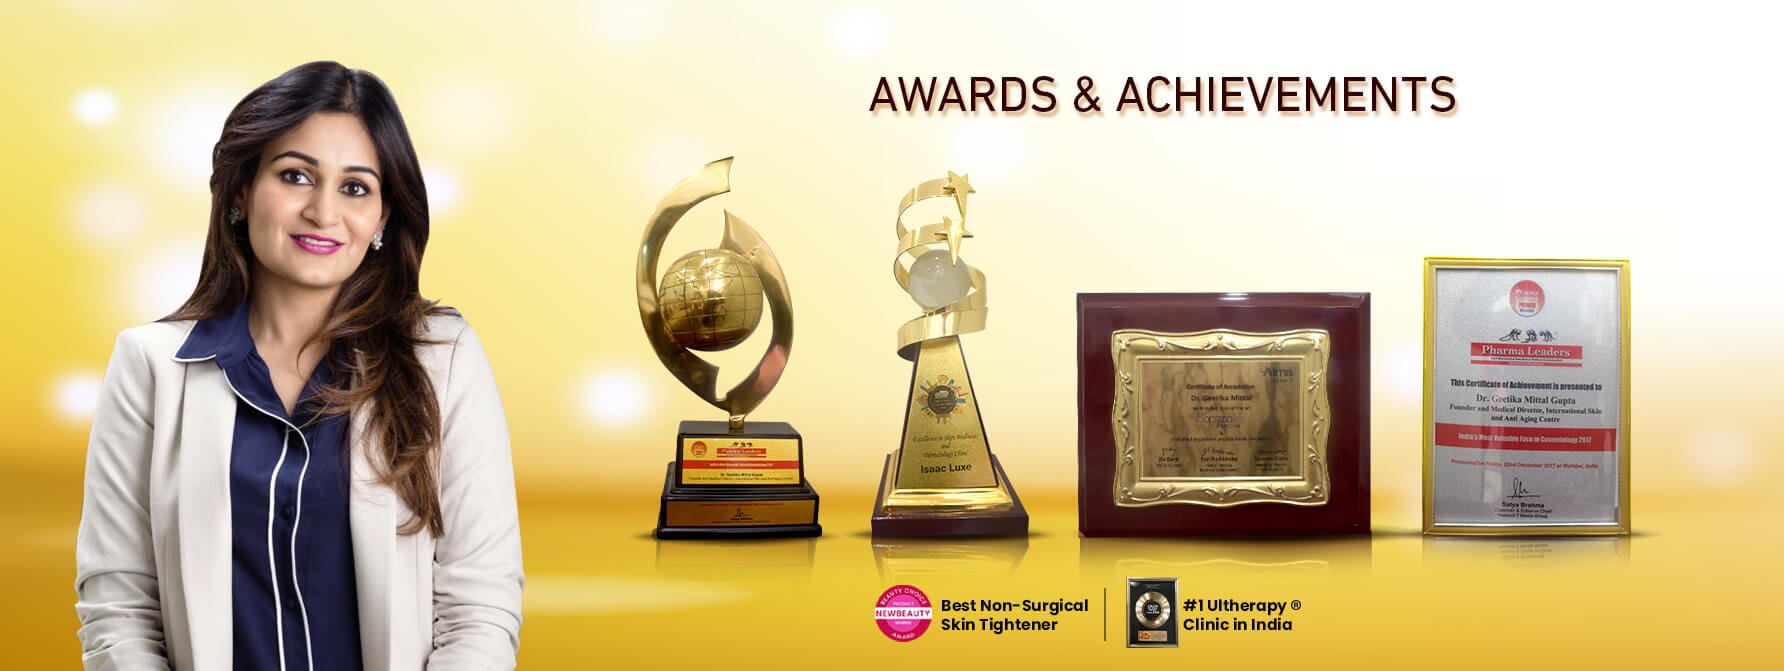 Award & Achievements